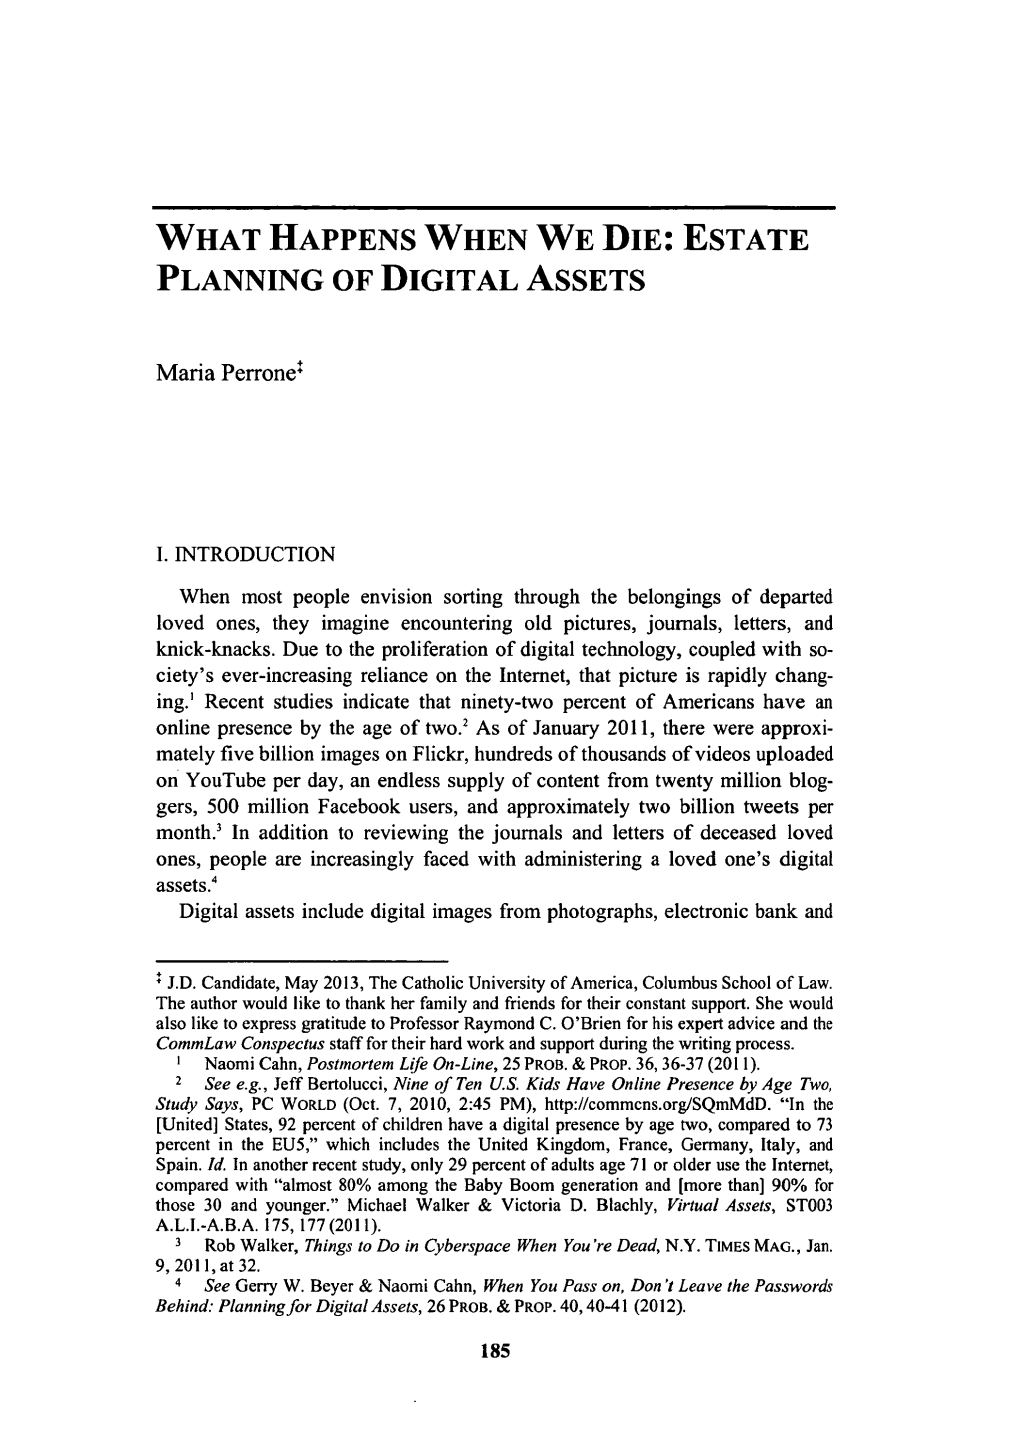 What Happens When We Die: Estate Planning of Digital Assets